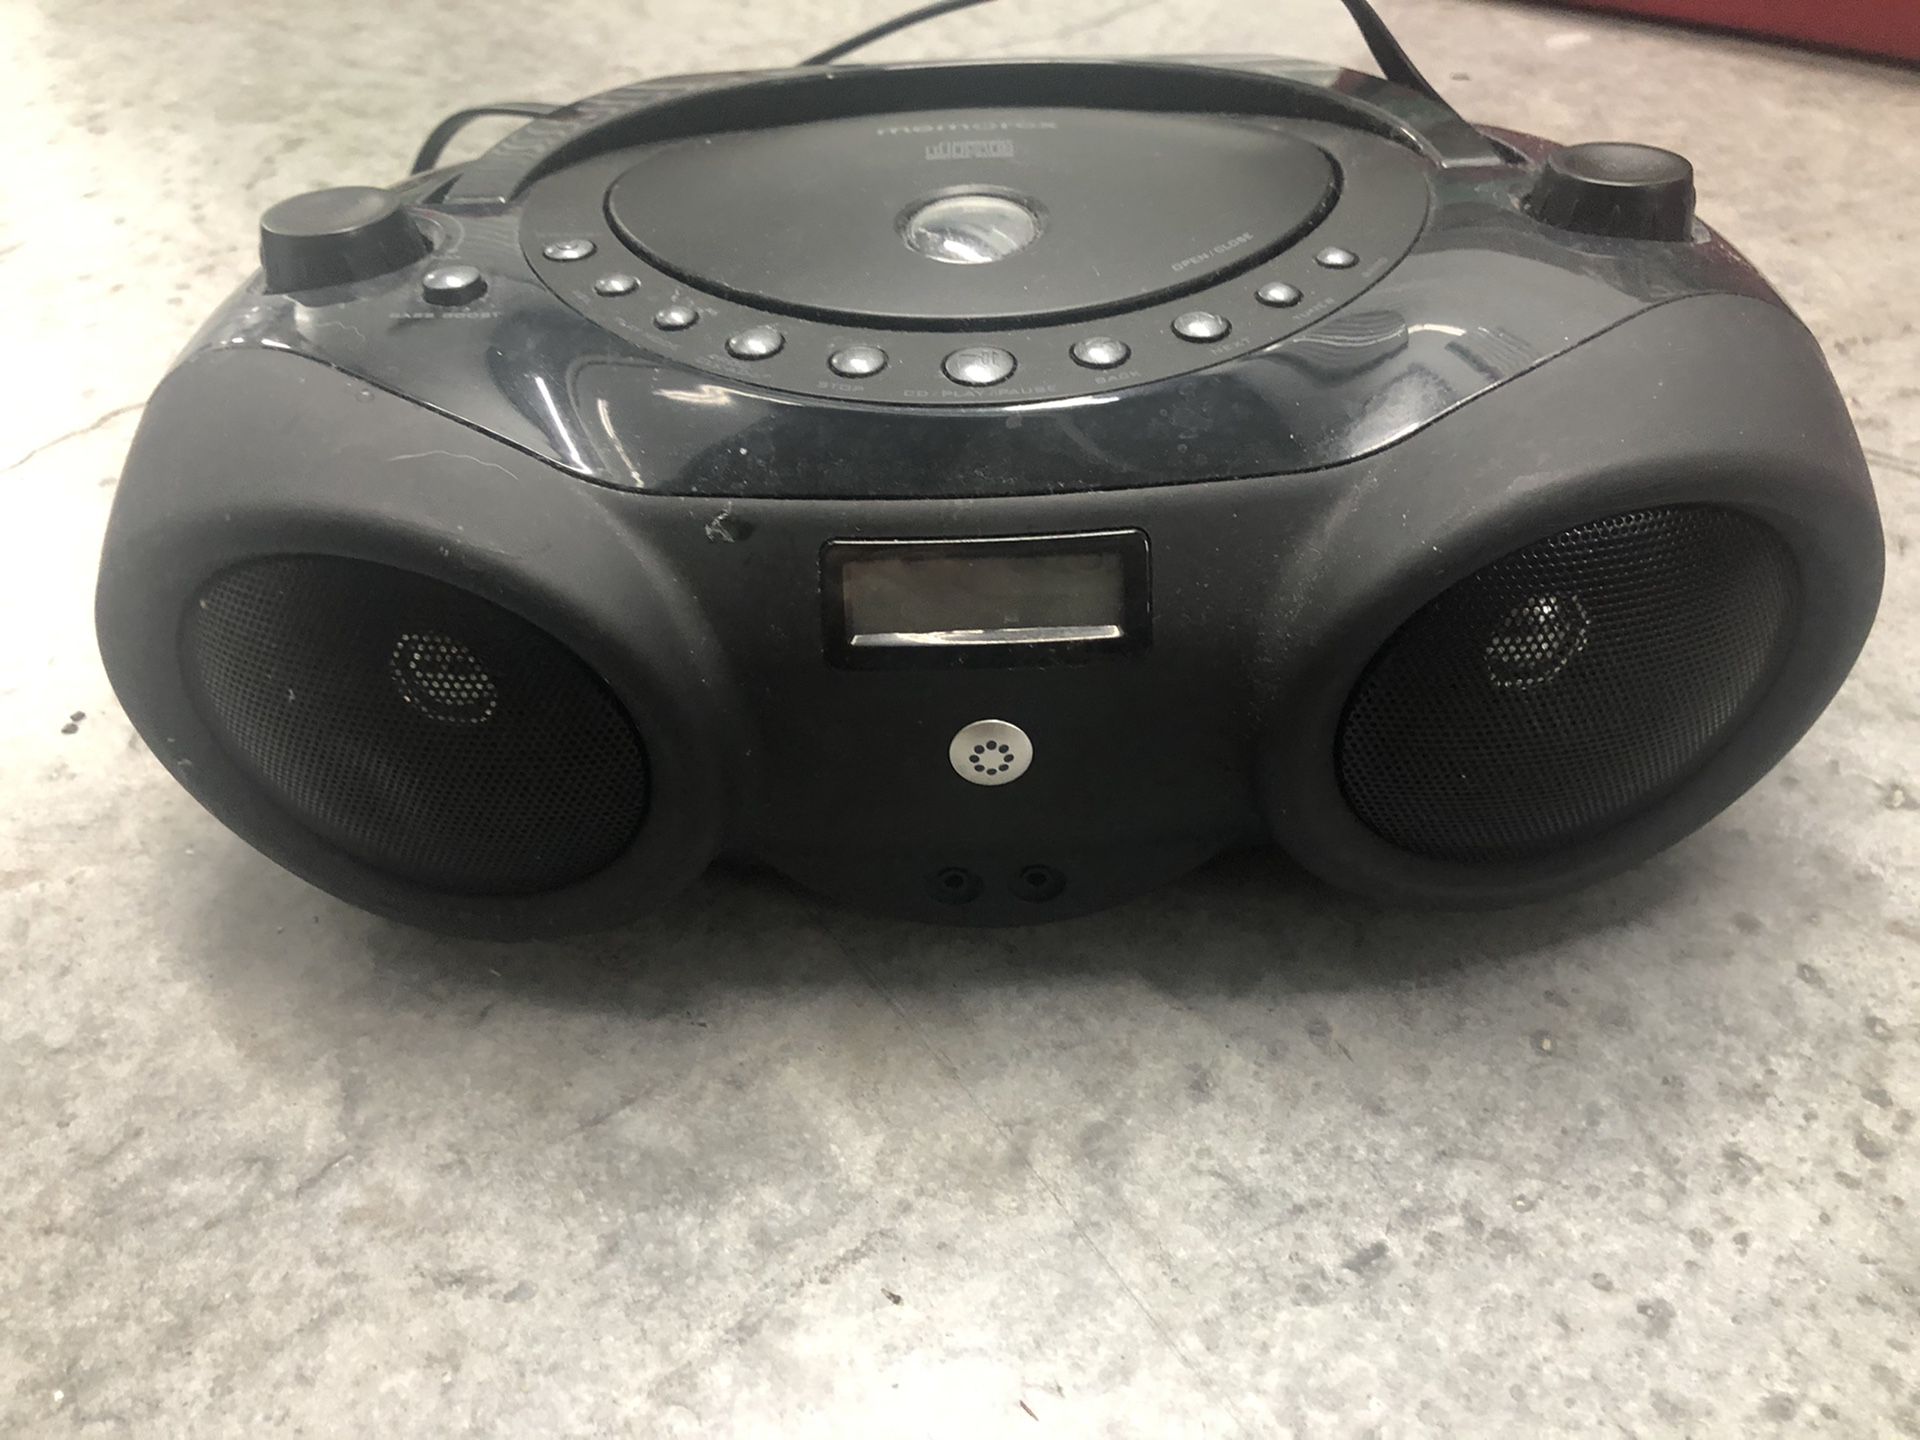 Memorex CD player/Radio